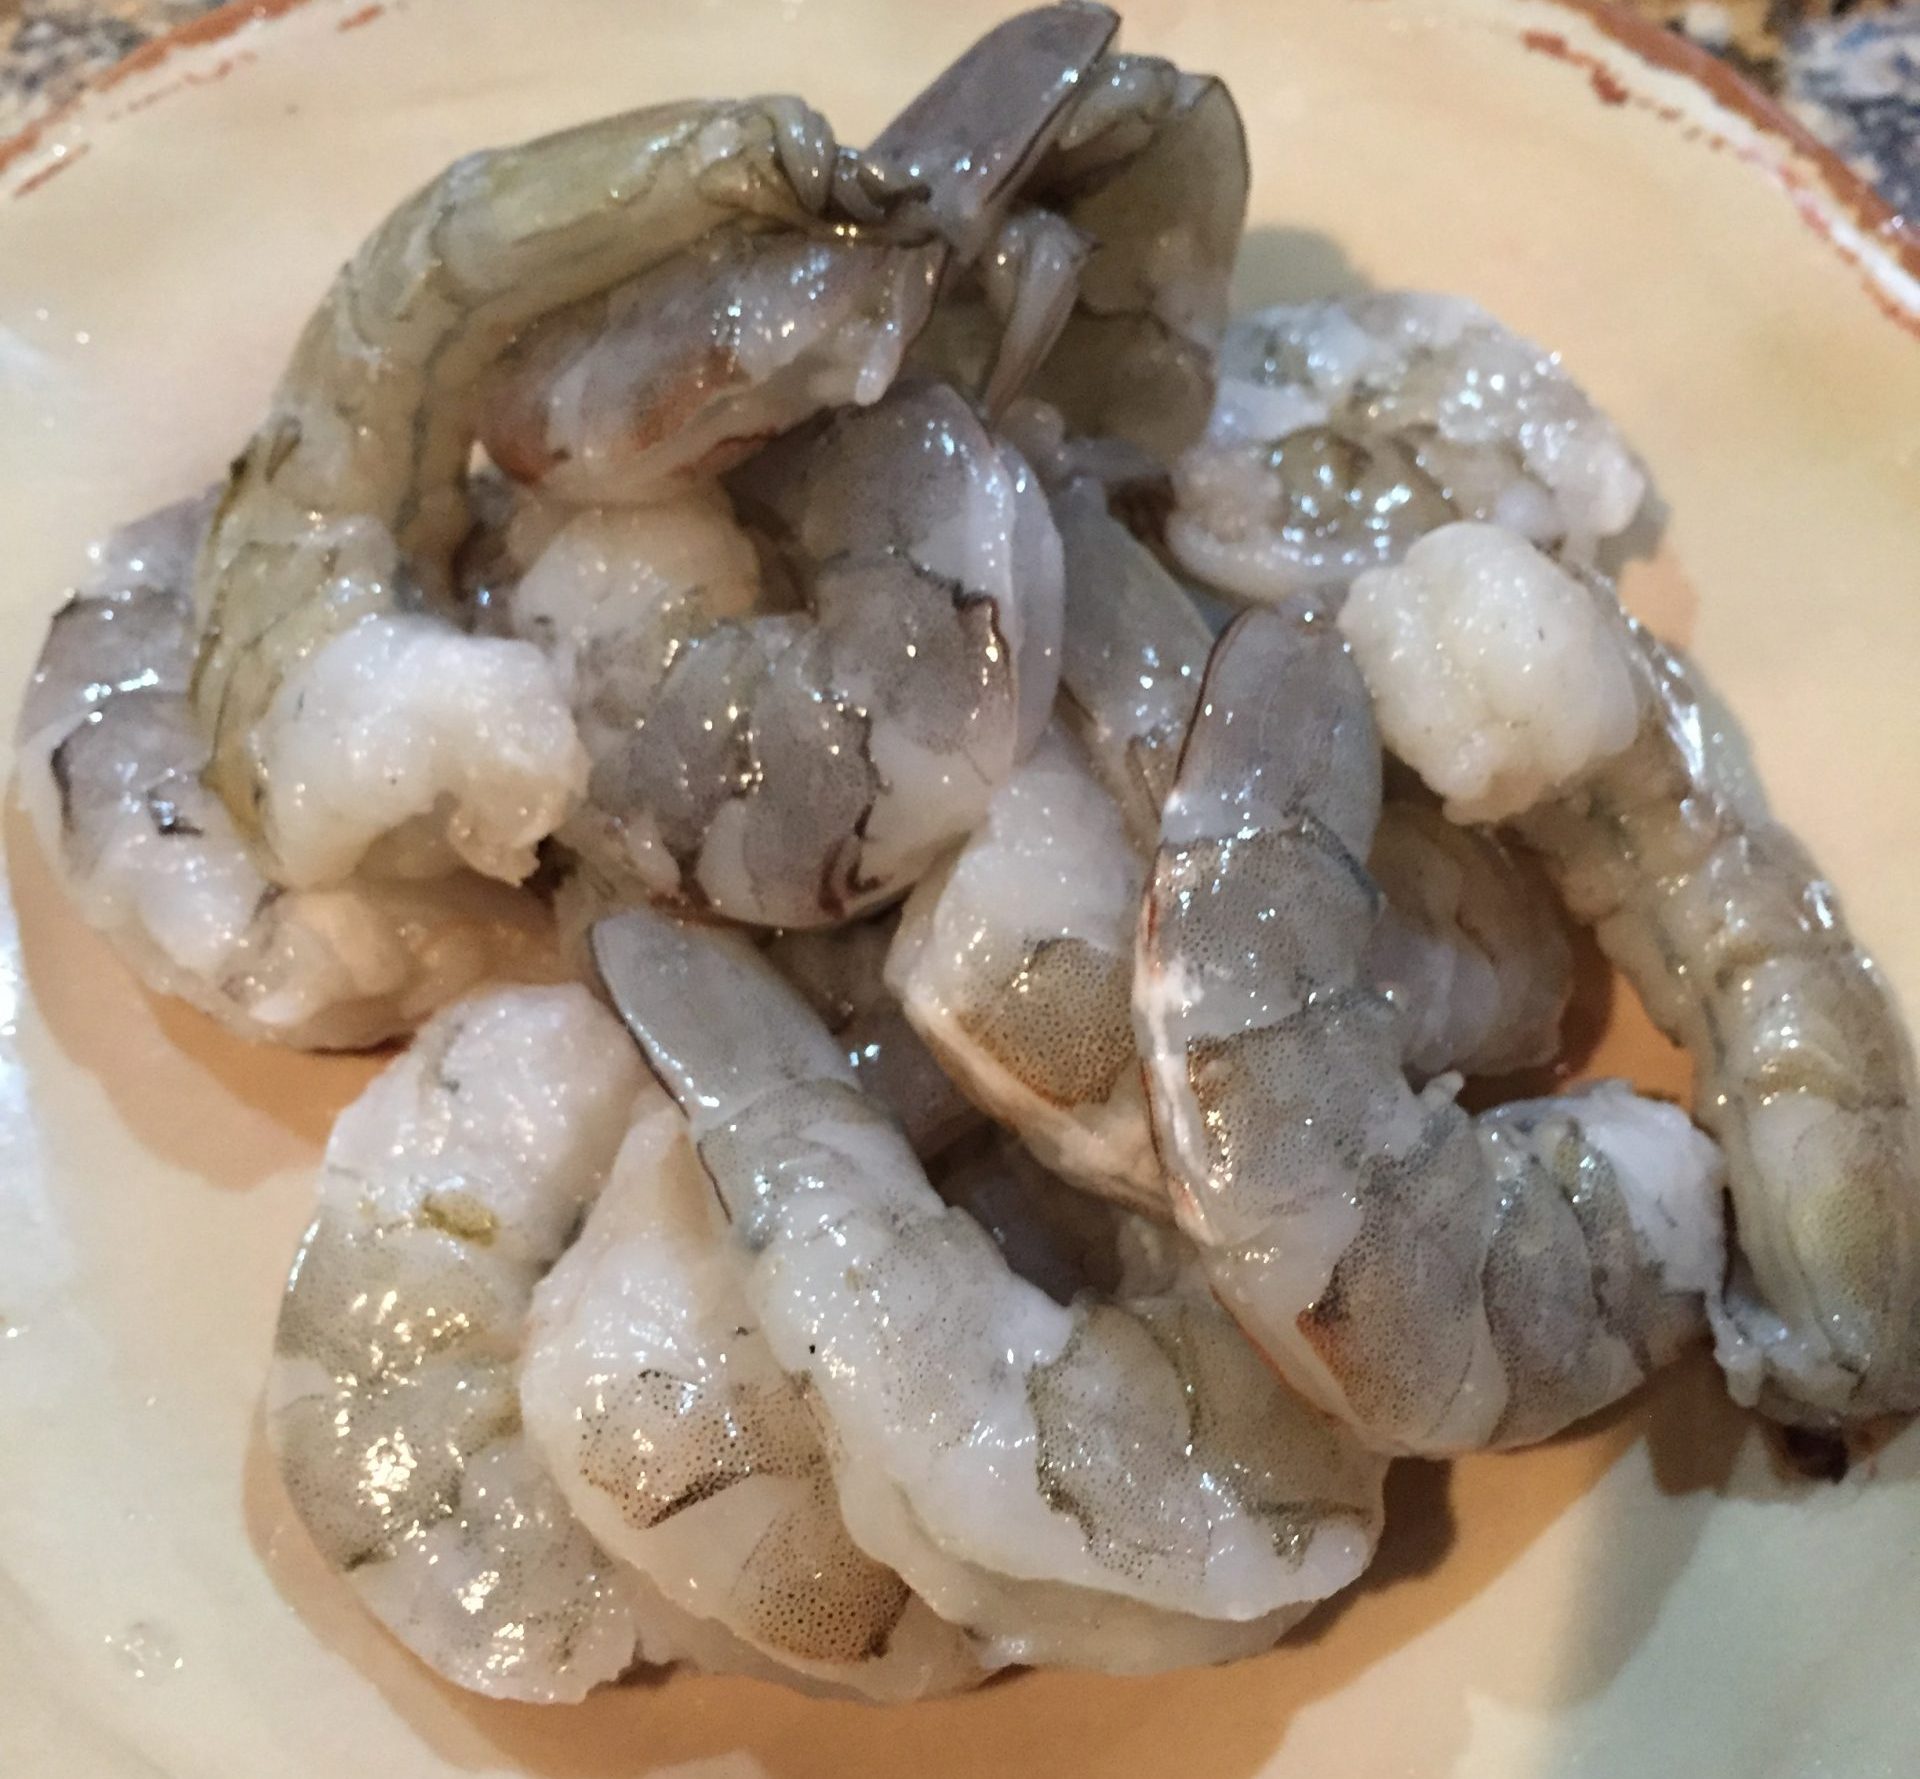 Peeled and deveined shrimp